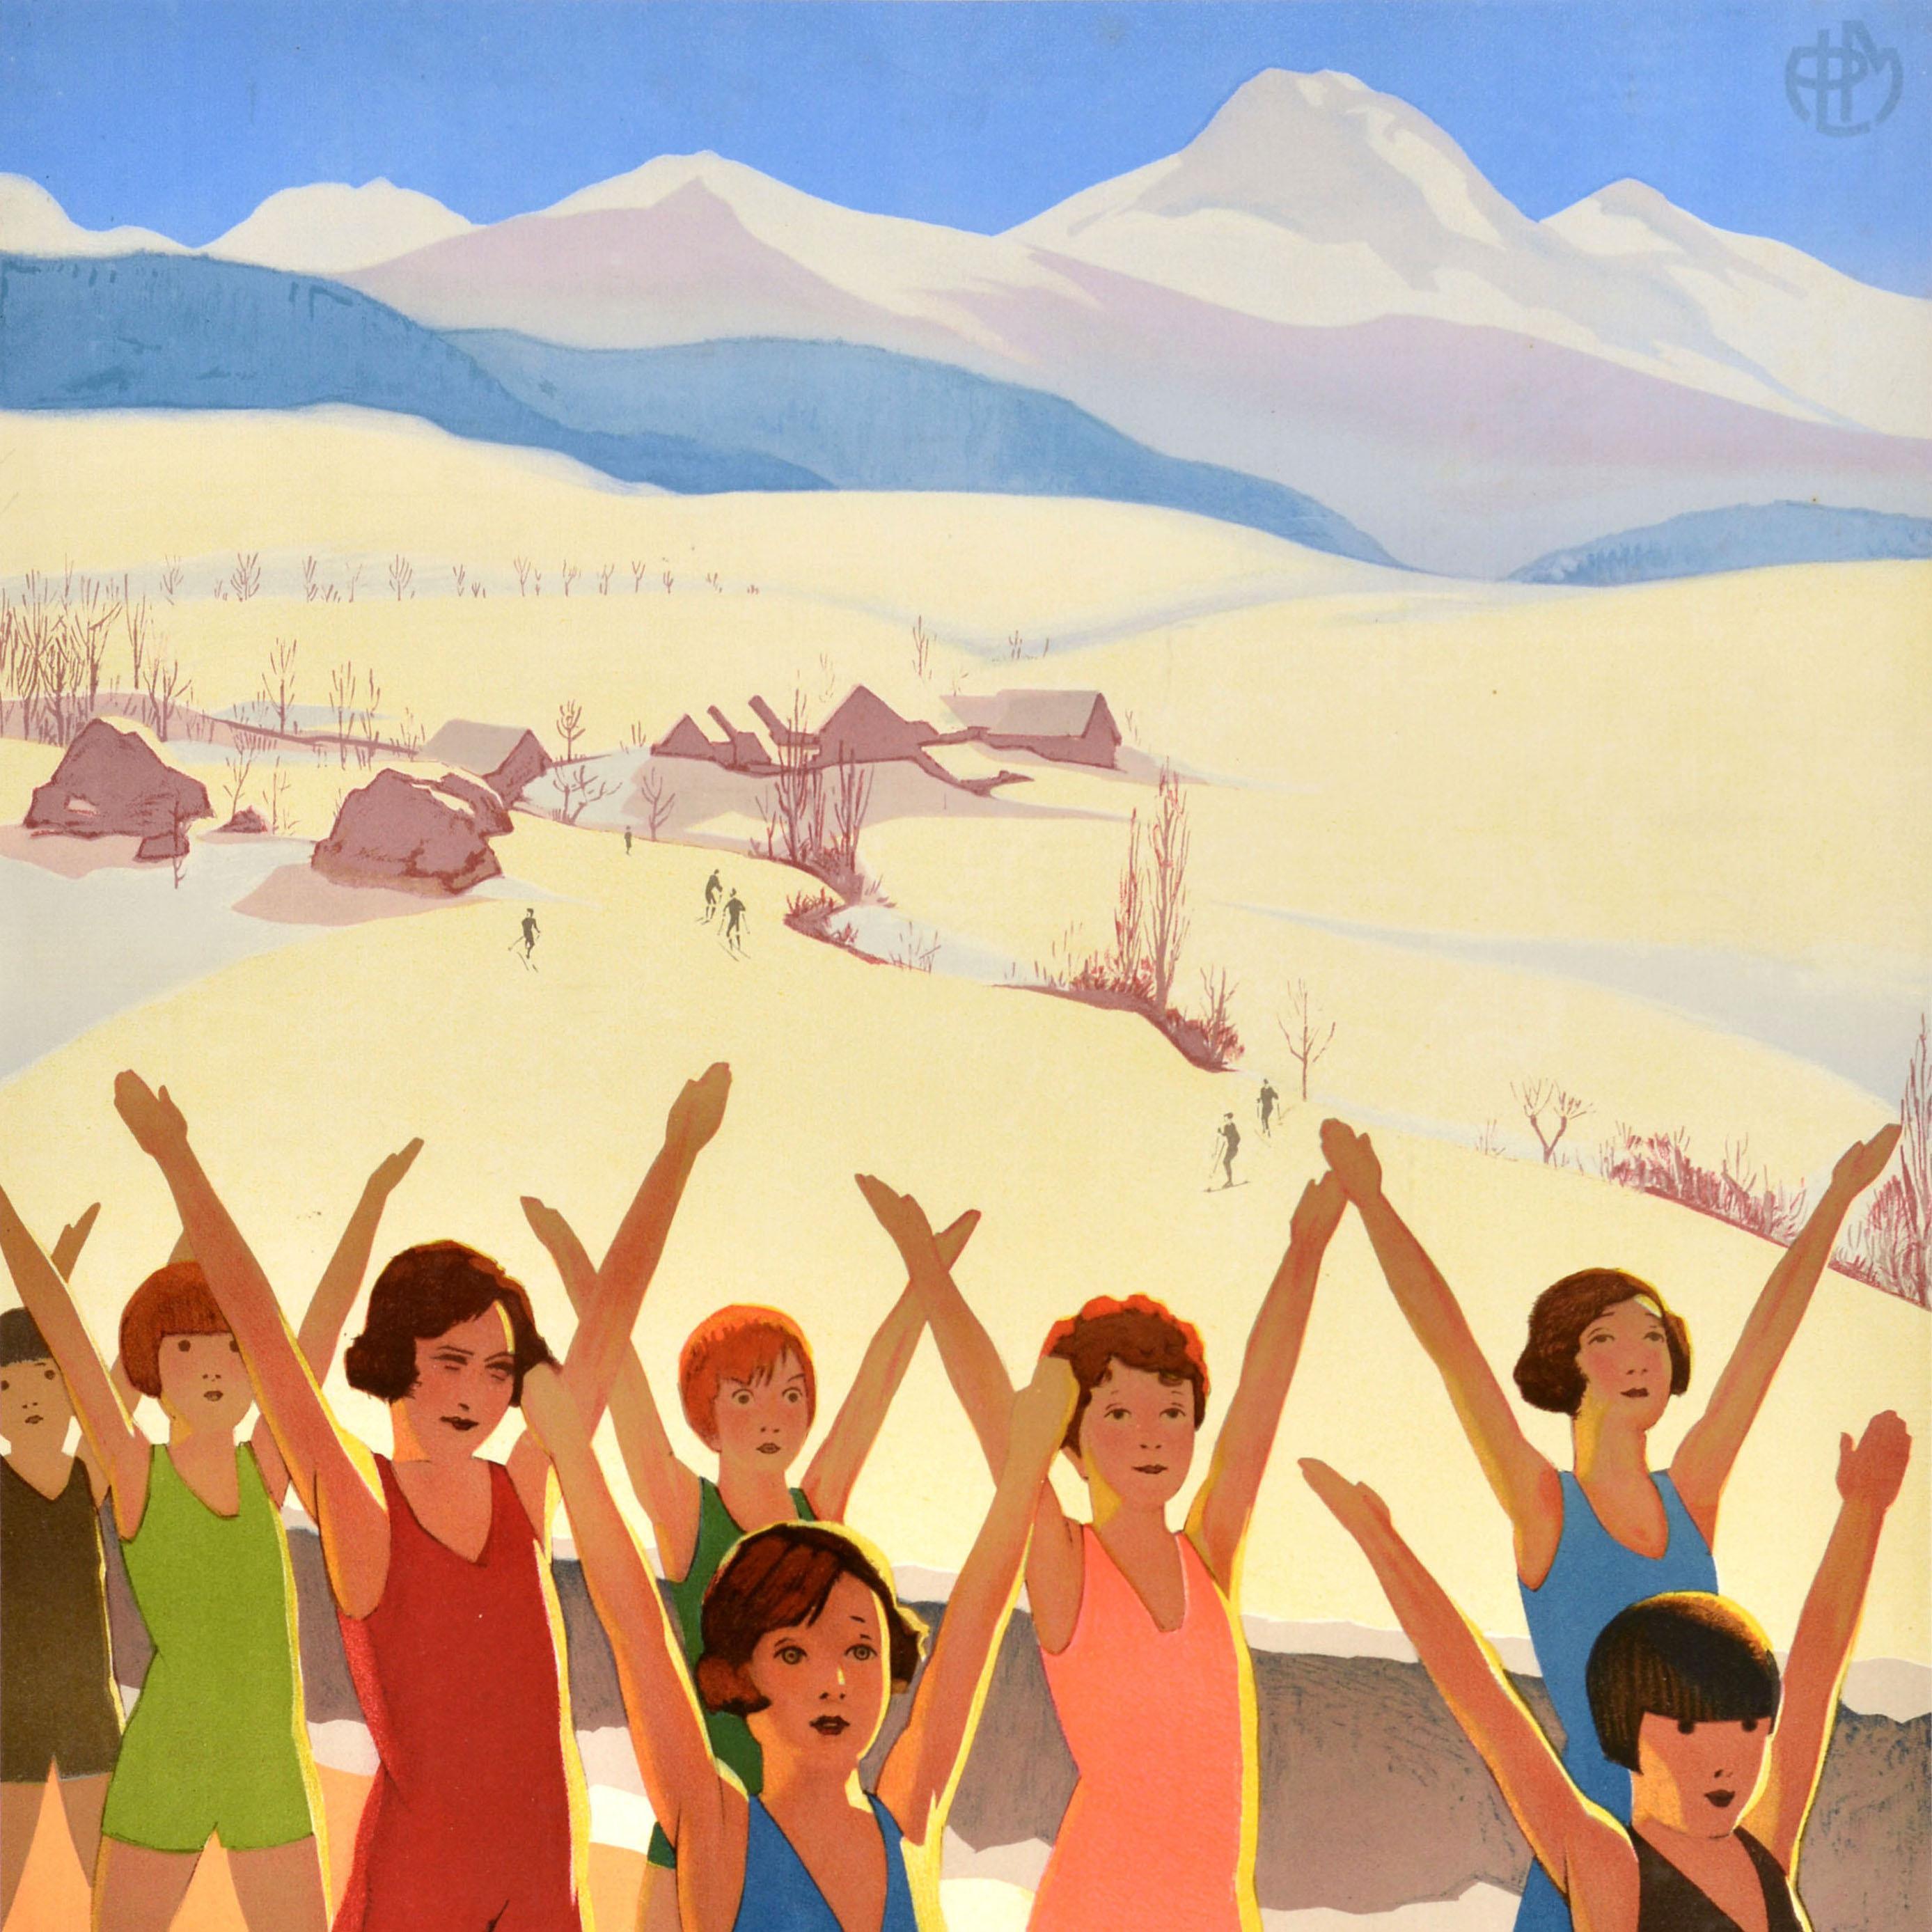 French Original Vintage Travel Poster Villard De Lans Paradise Art Deco Roger Broders For Sale